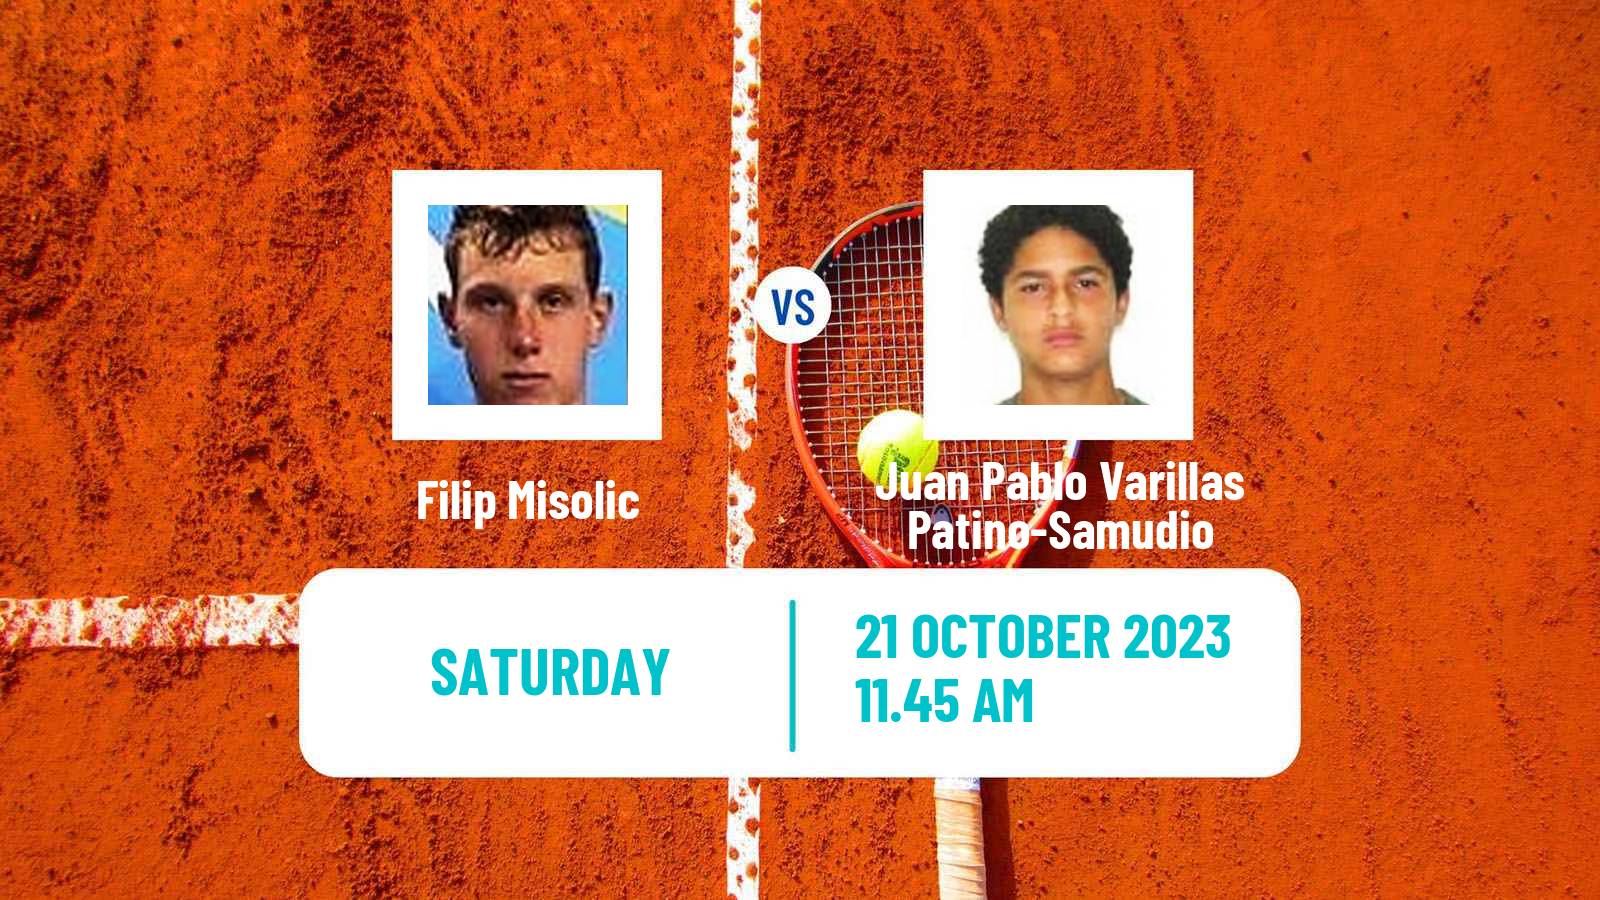 Tennis ATP Vienna Filip Misolic - Juan Pablo Varillas Patino-Samudio